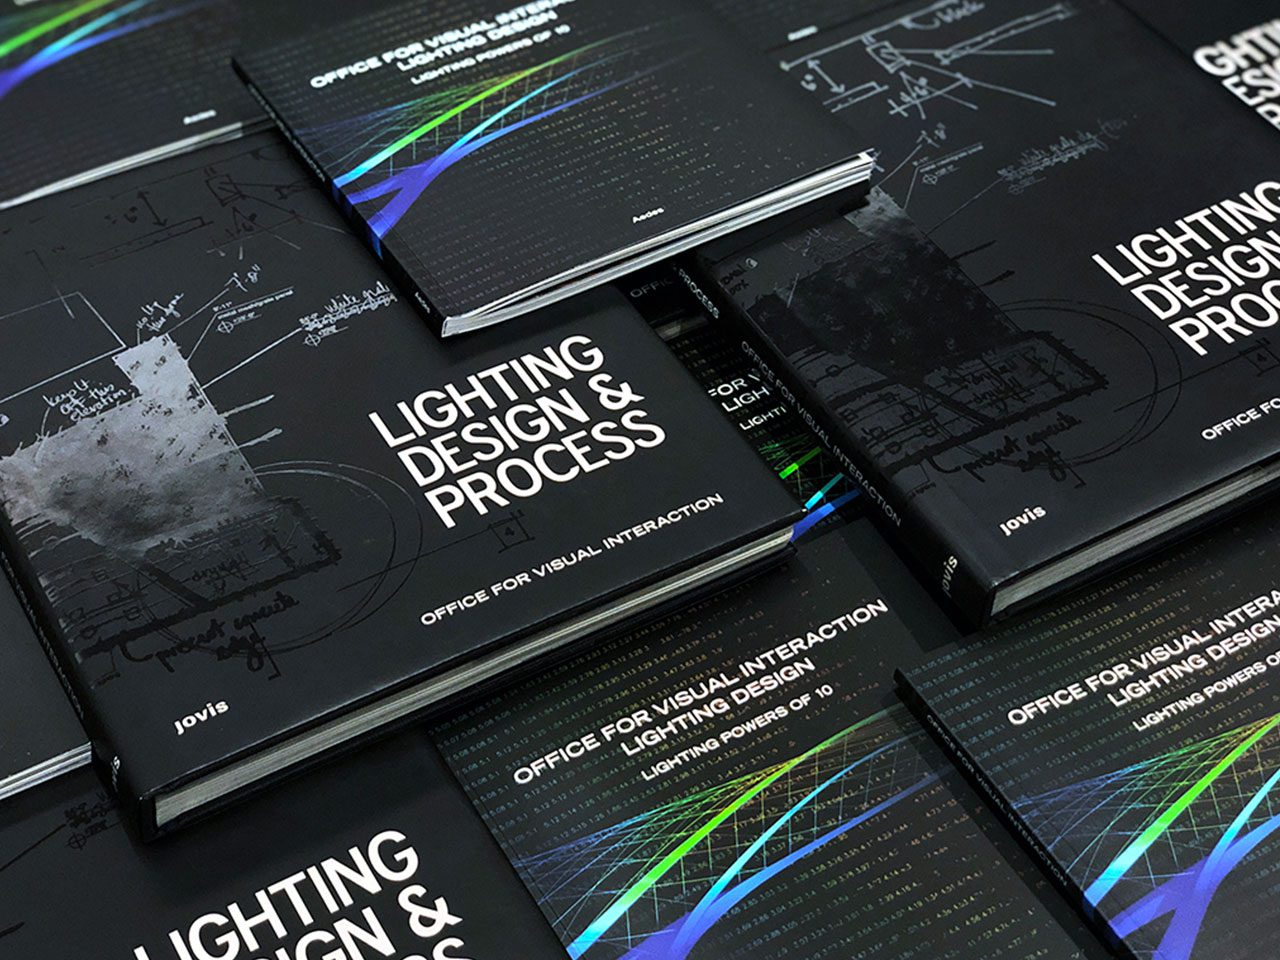 Lighting Design & Process book OVI